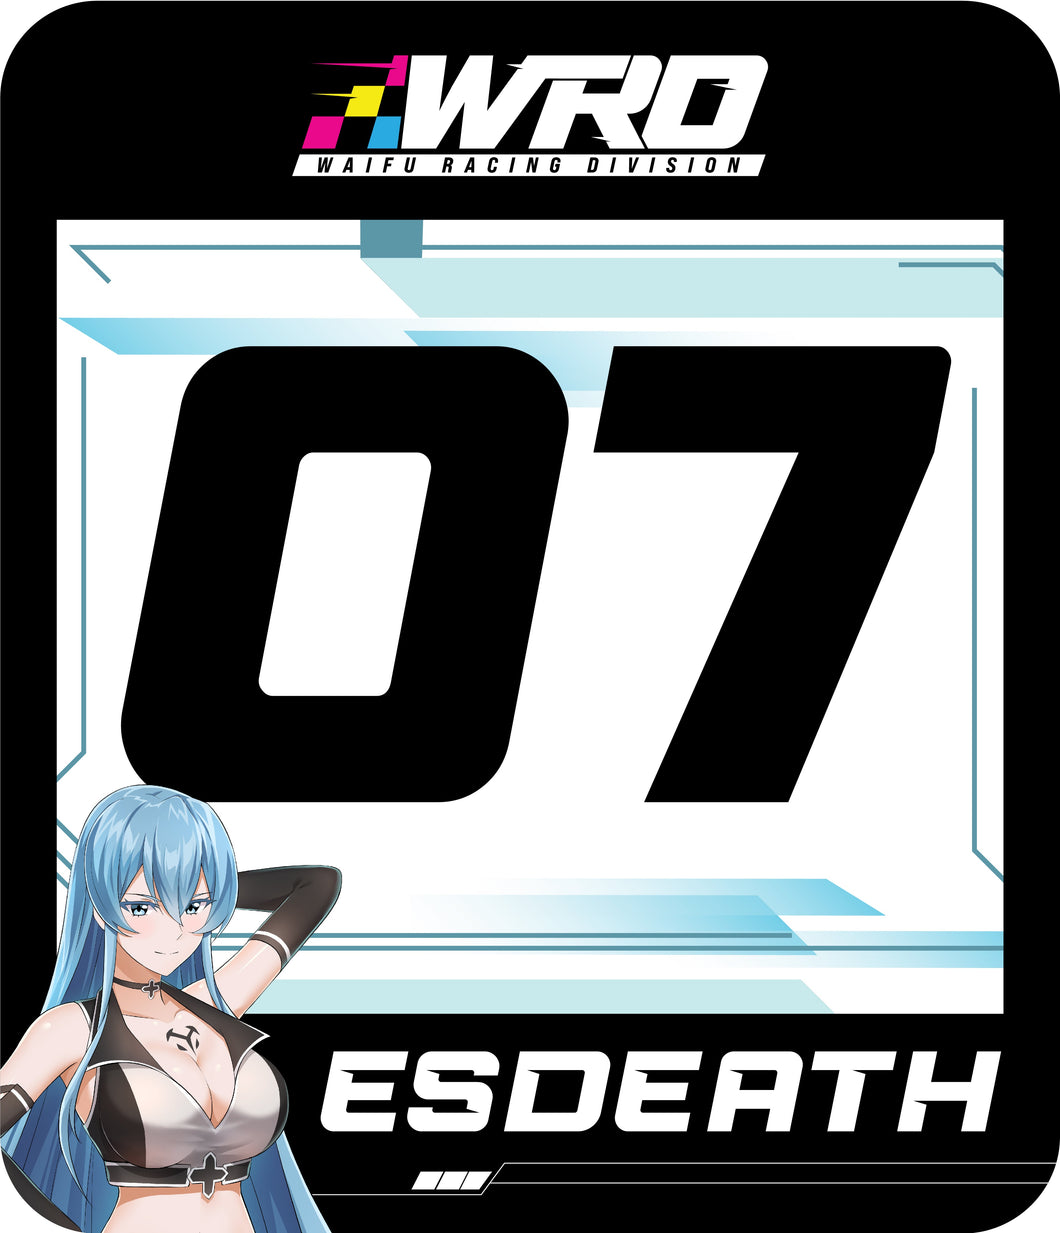 EsDeath Track Number (Set)